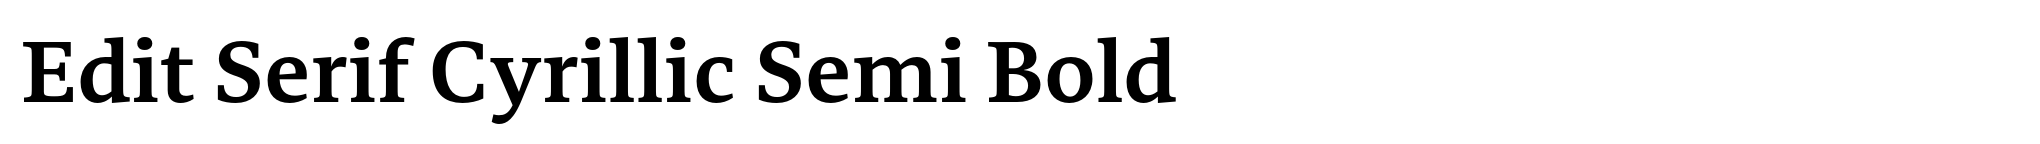 Edit Serif Cyrillic Semi Bold image